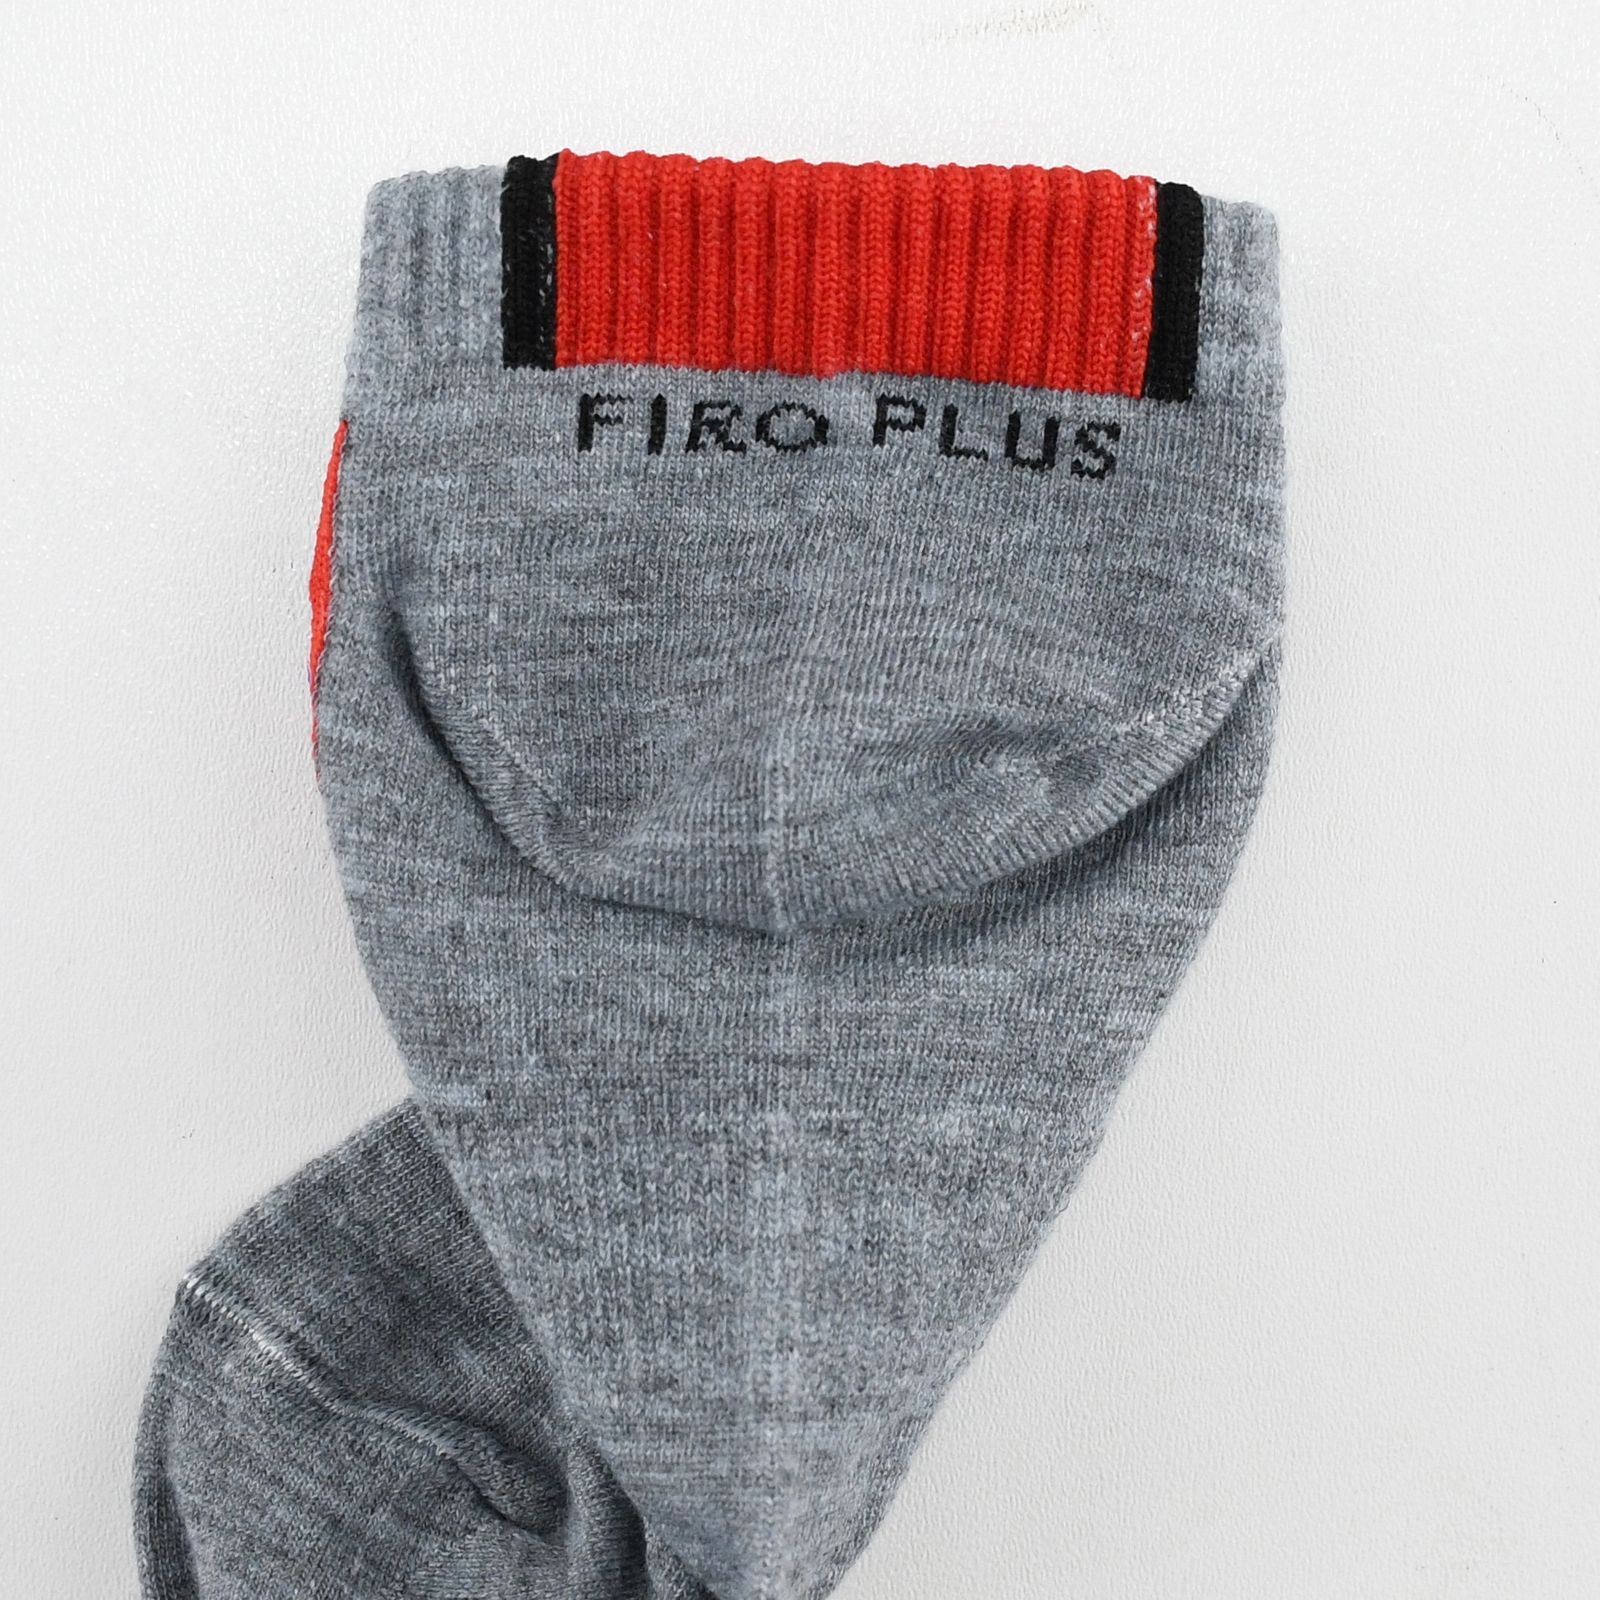 جوراب مردانه فیرو پلاس مدل FP200 مجموعه 4 عددی -  - 7